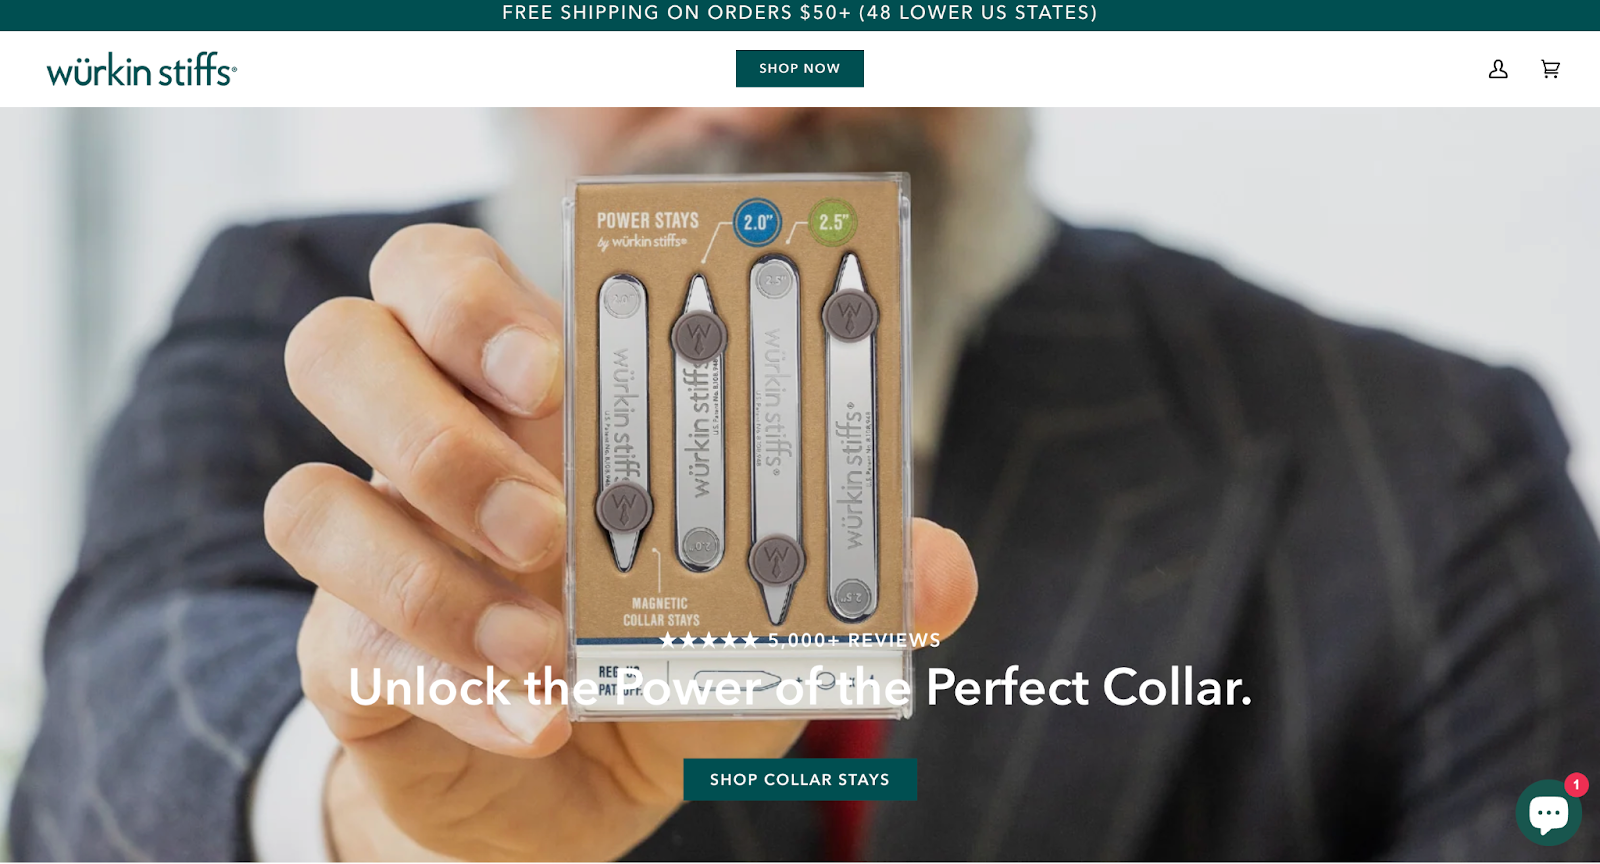 single product website example: Wurkin Stiffs